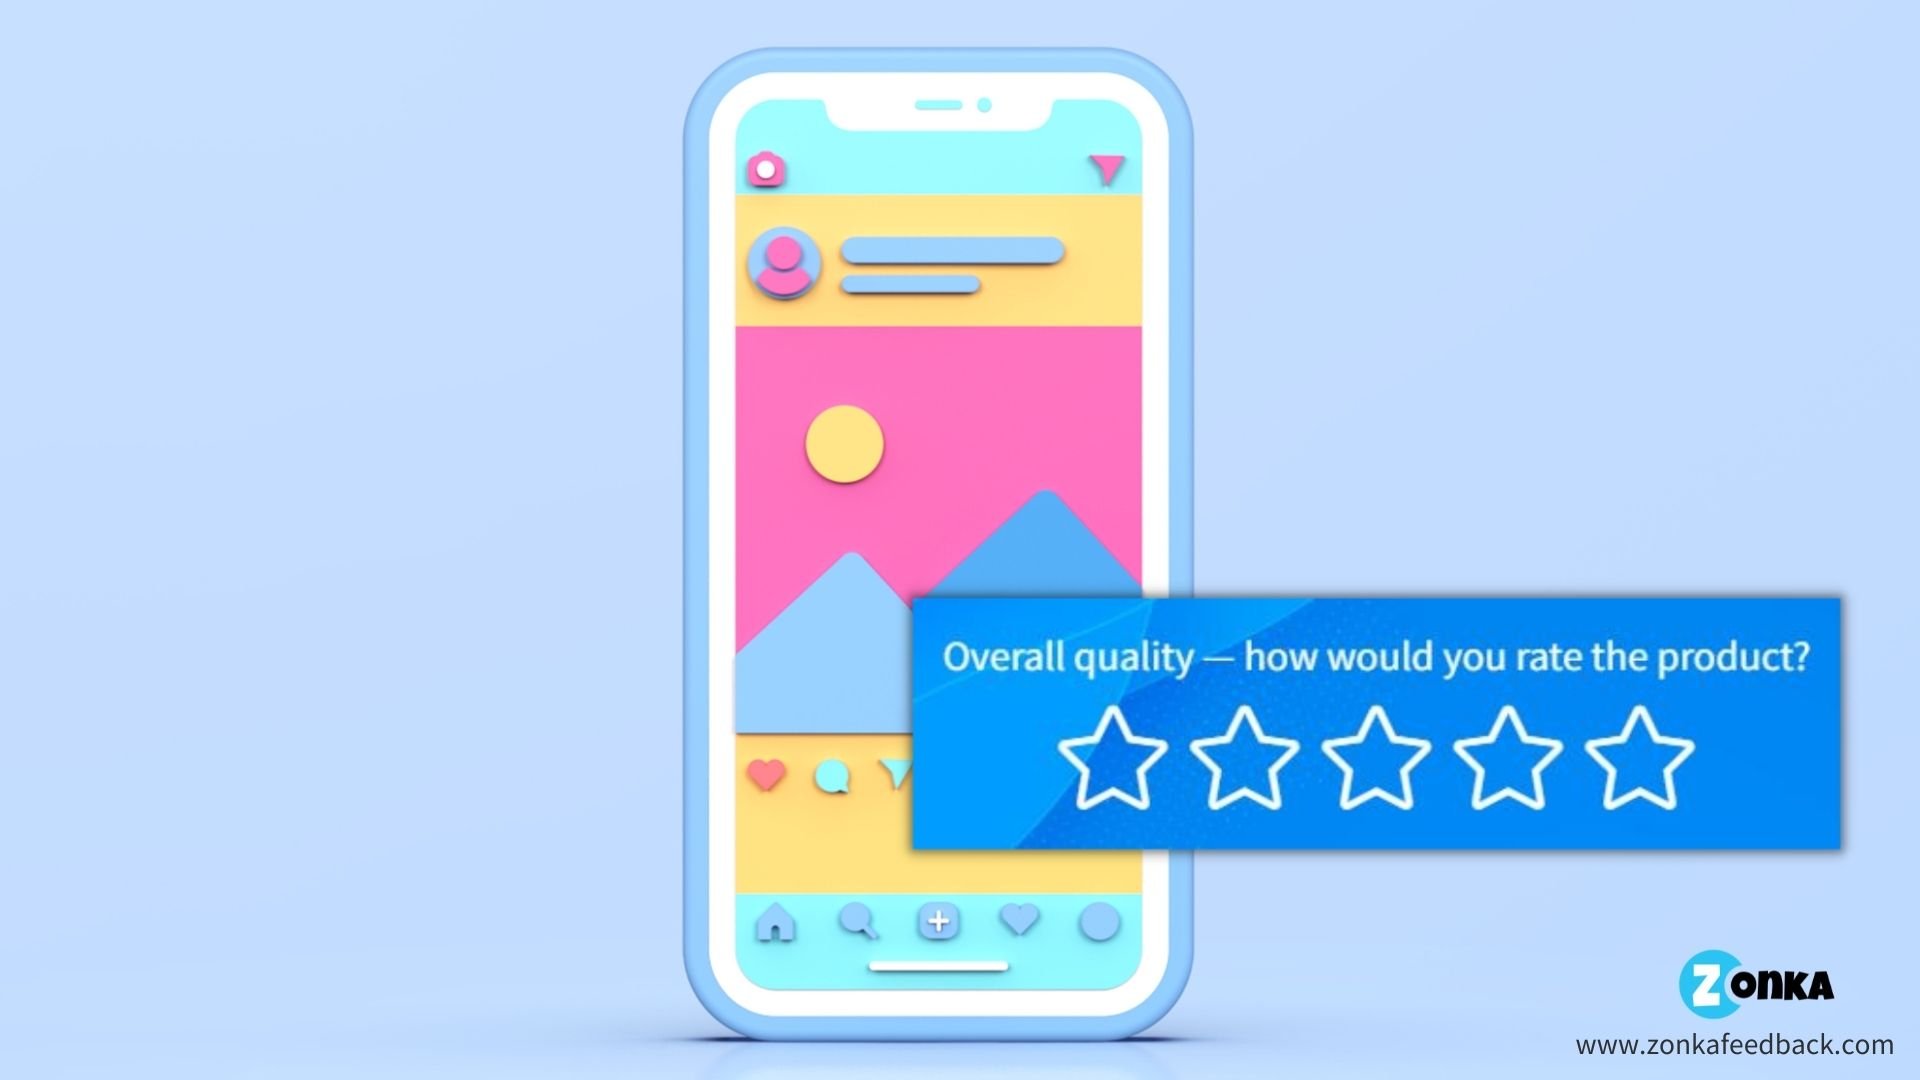 in-app survey with in-app feedback tools